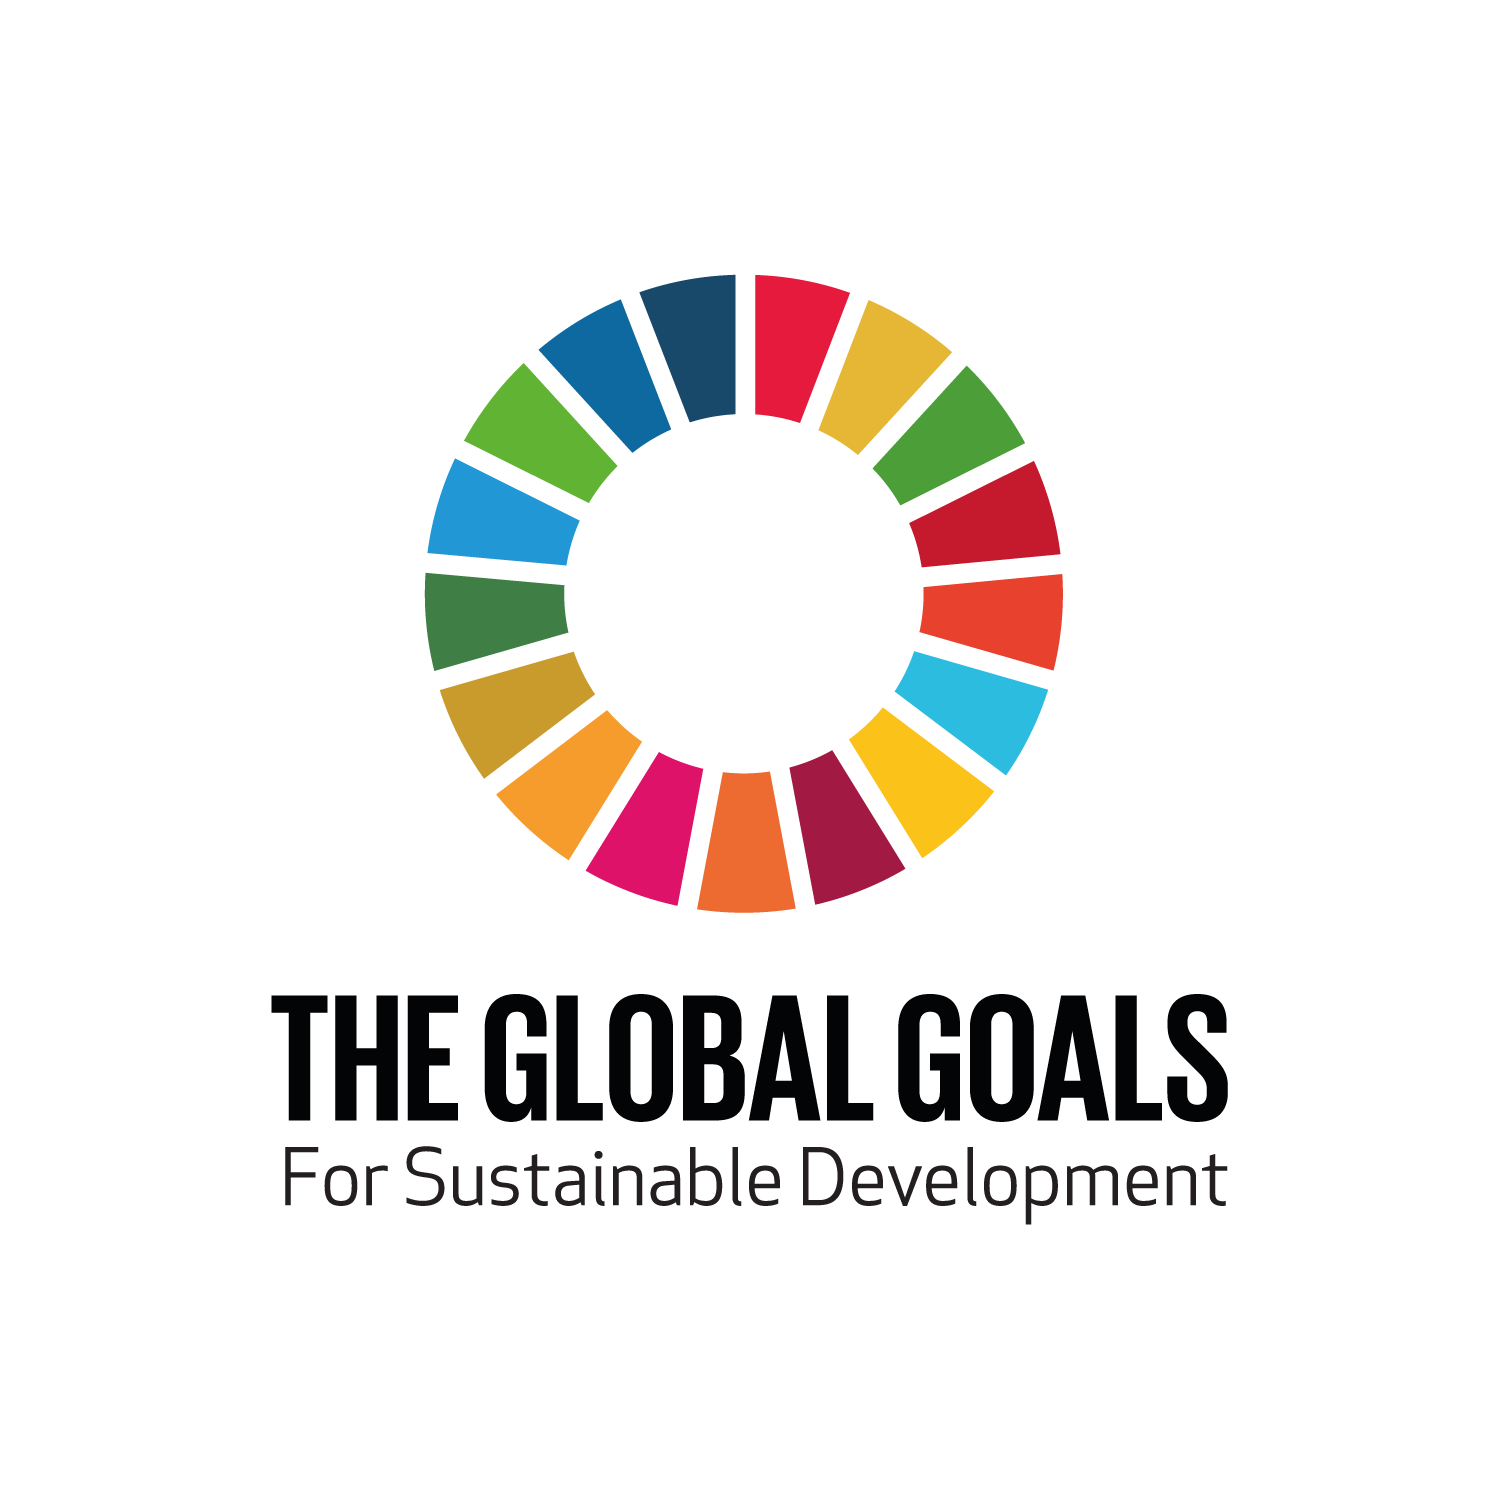 2030 agenda for sustainable development